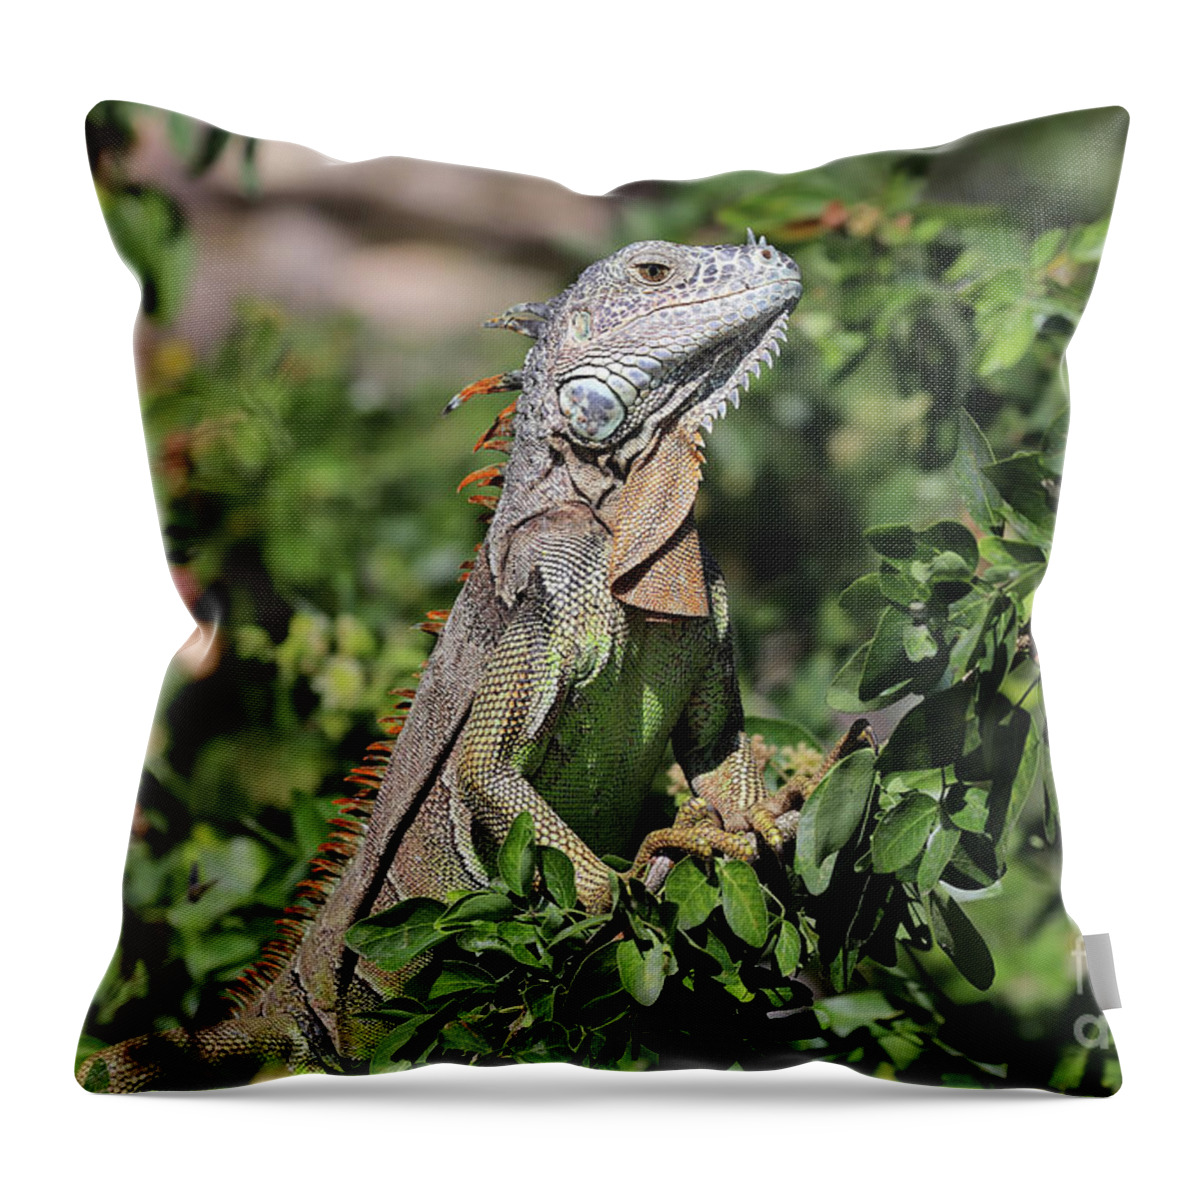 Animal Throw Pillow featuring the photograph Green Iguana by Teresa Zieba